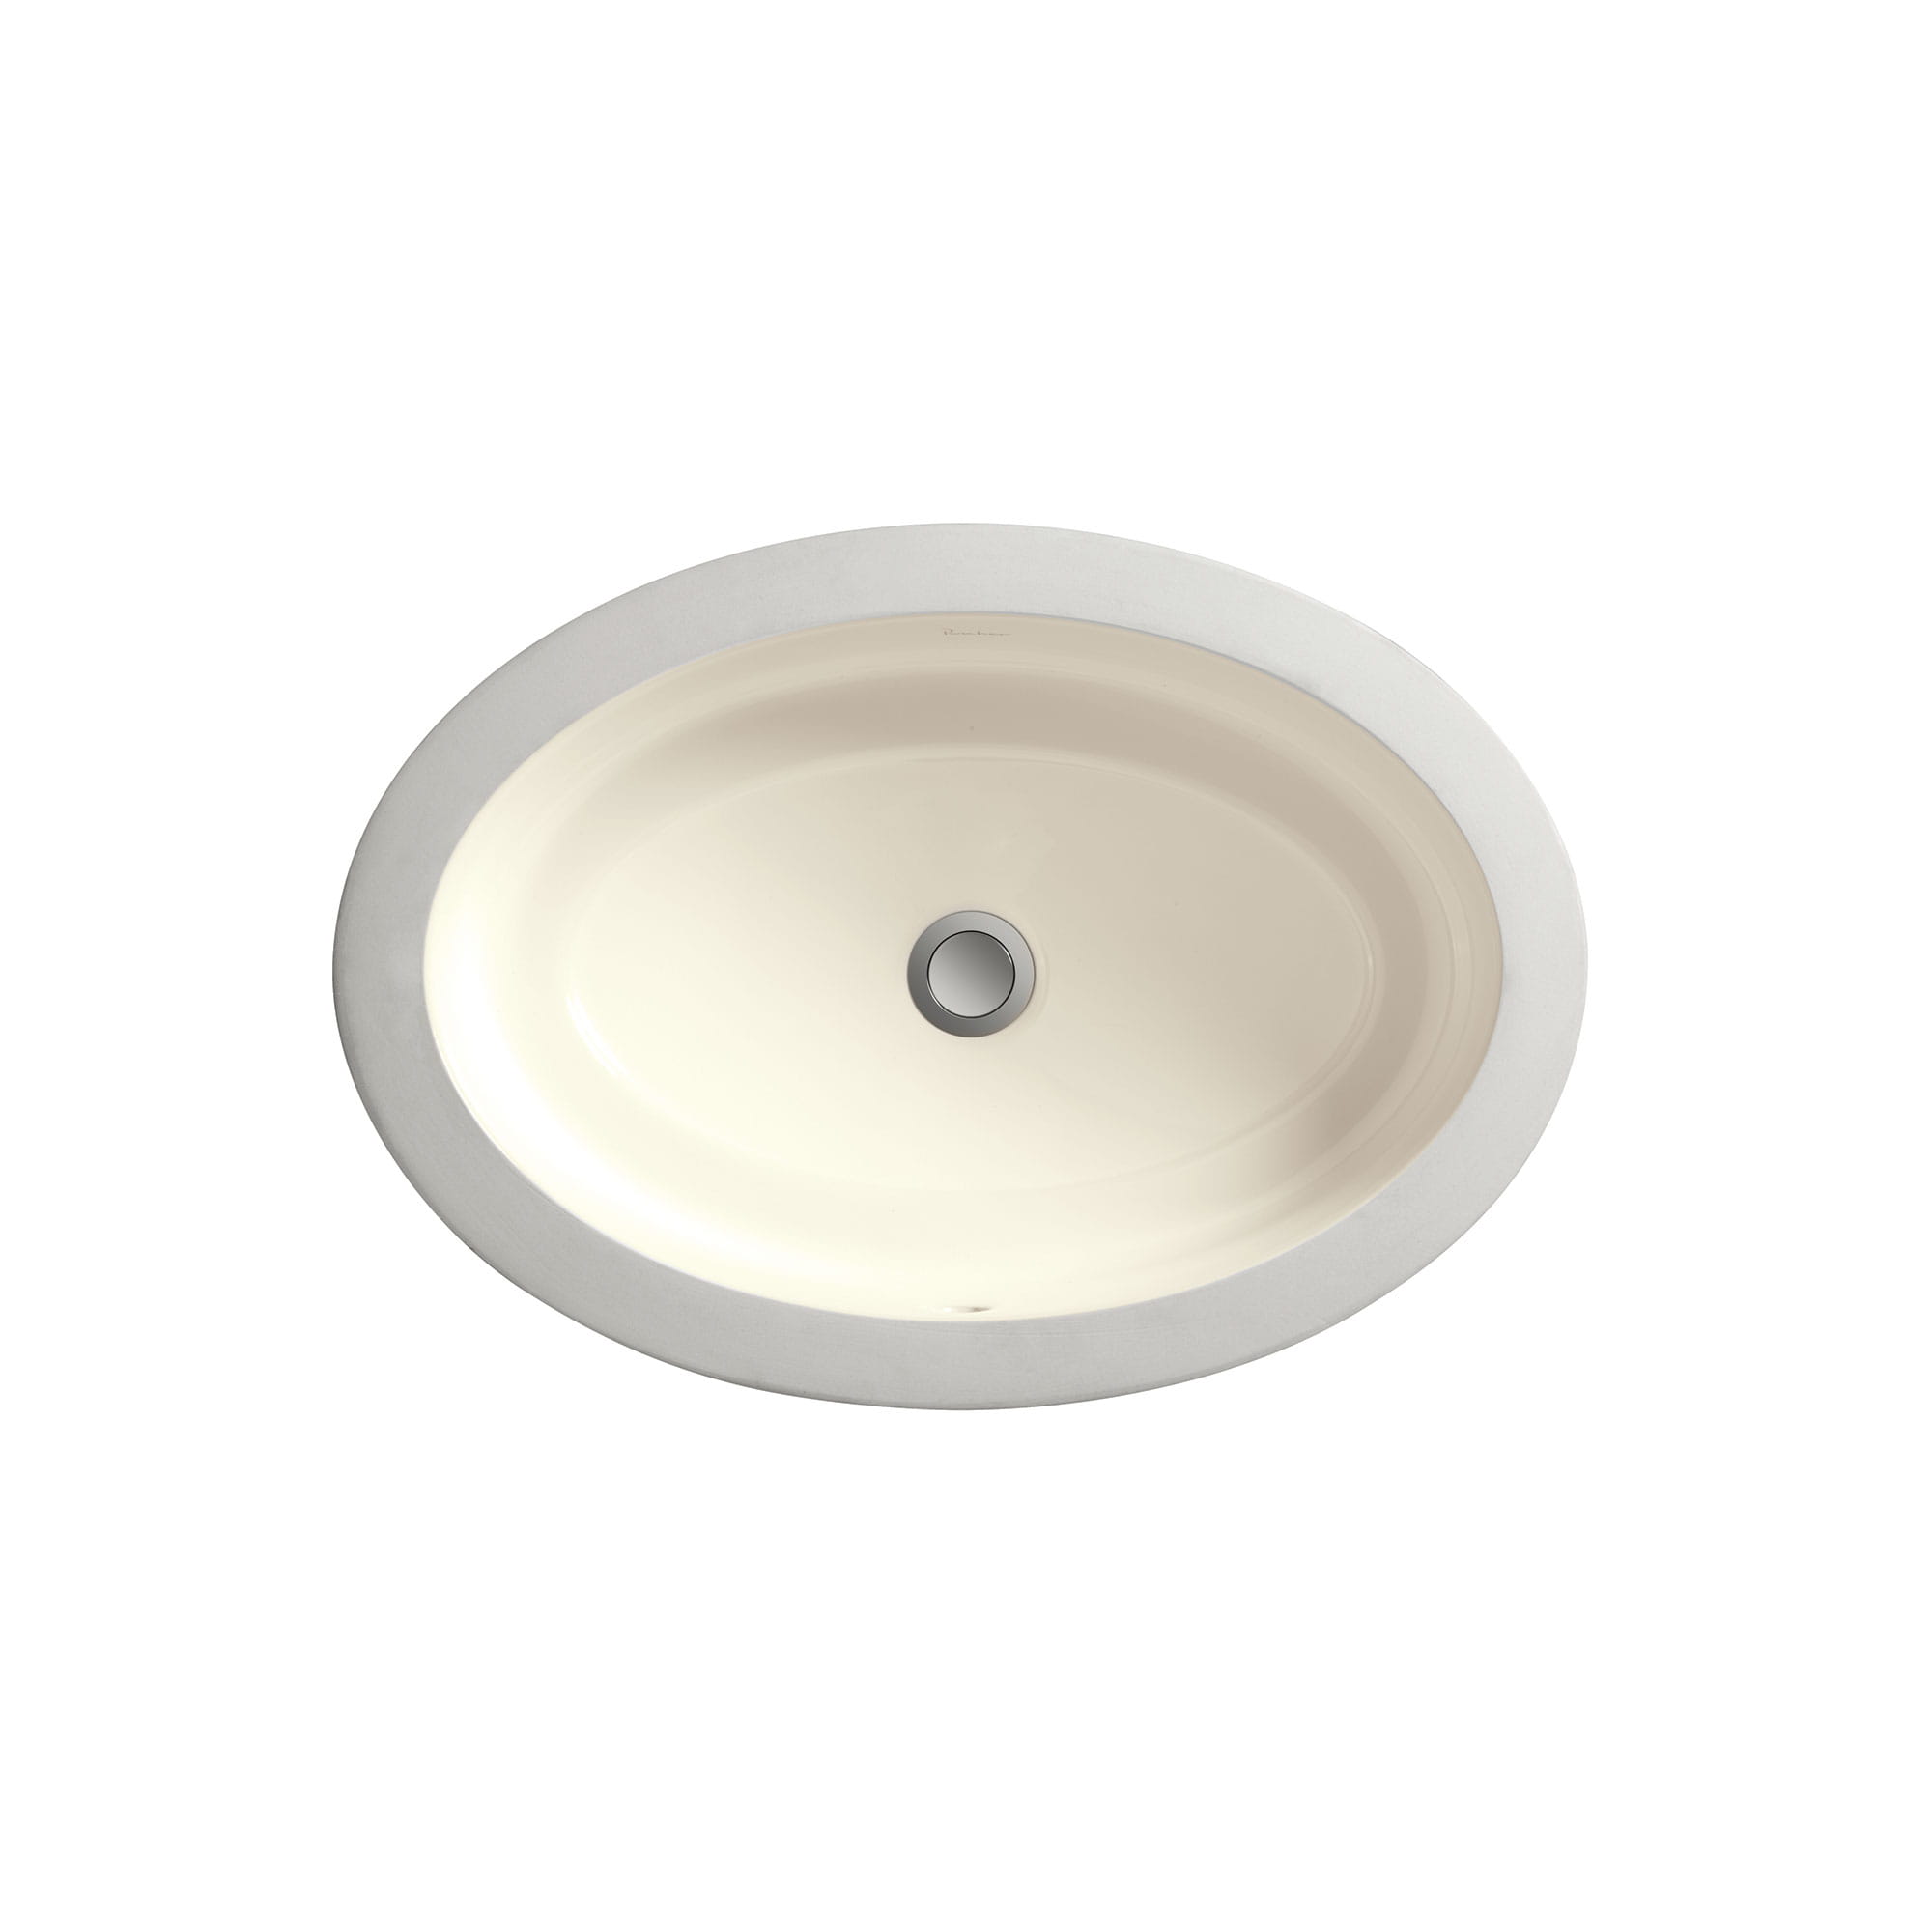 POP® Petite Oval Under Counter Sink